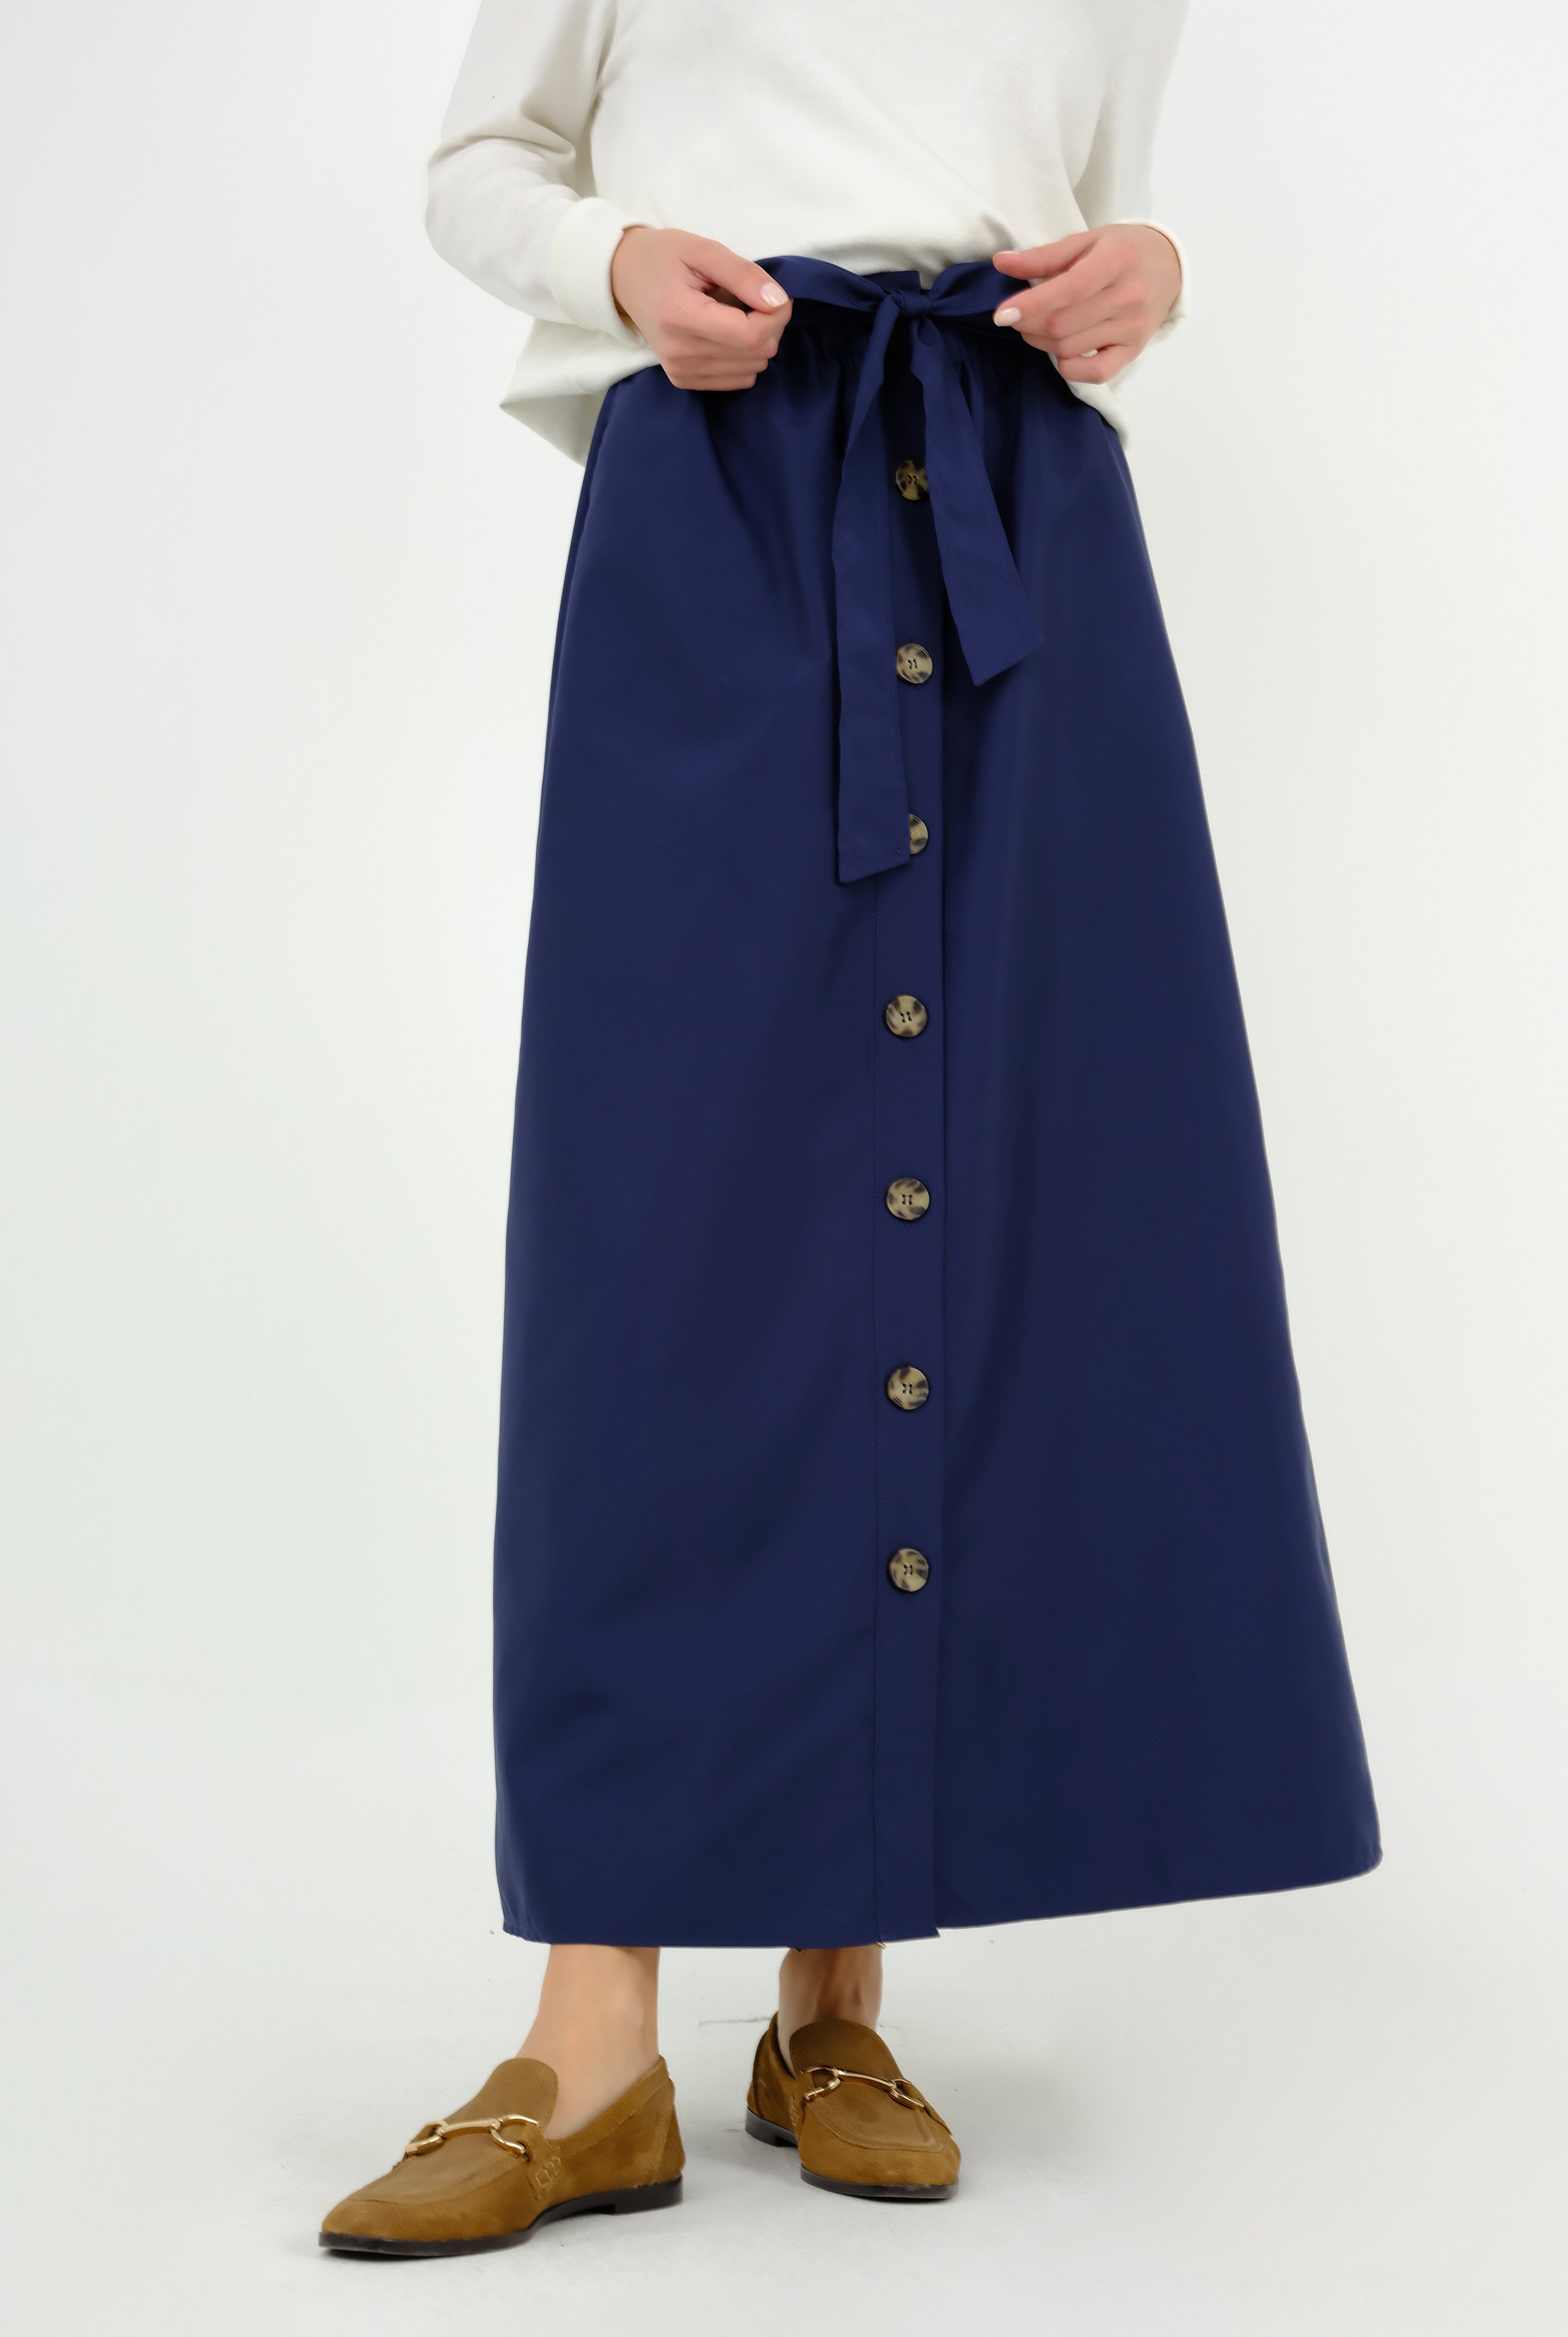 Canvas Skirt Navy Blue 